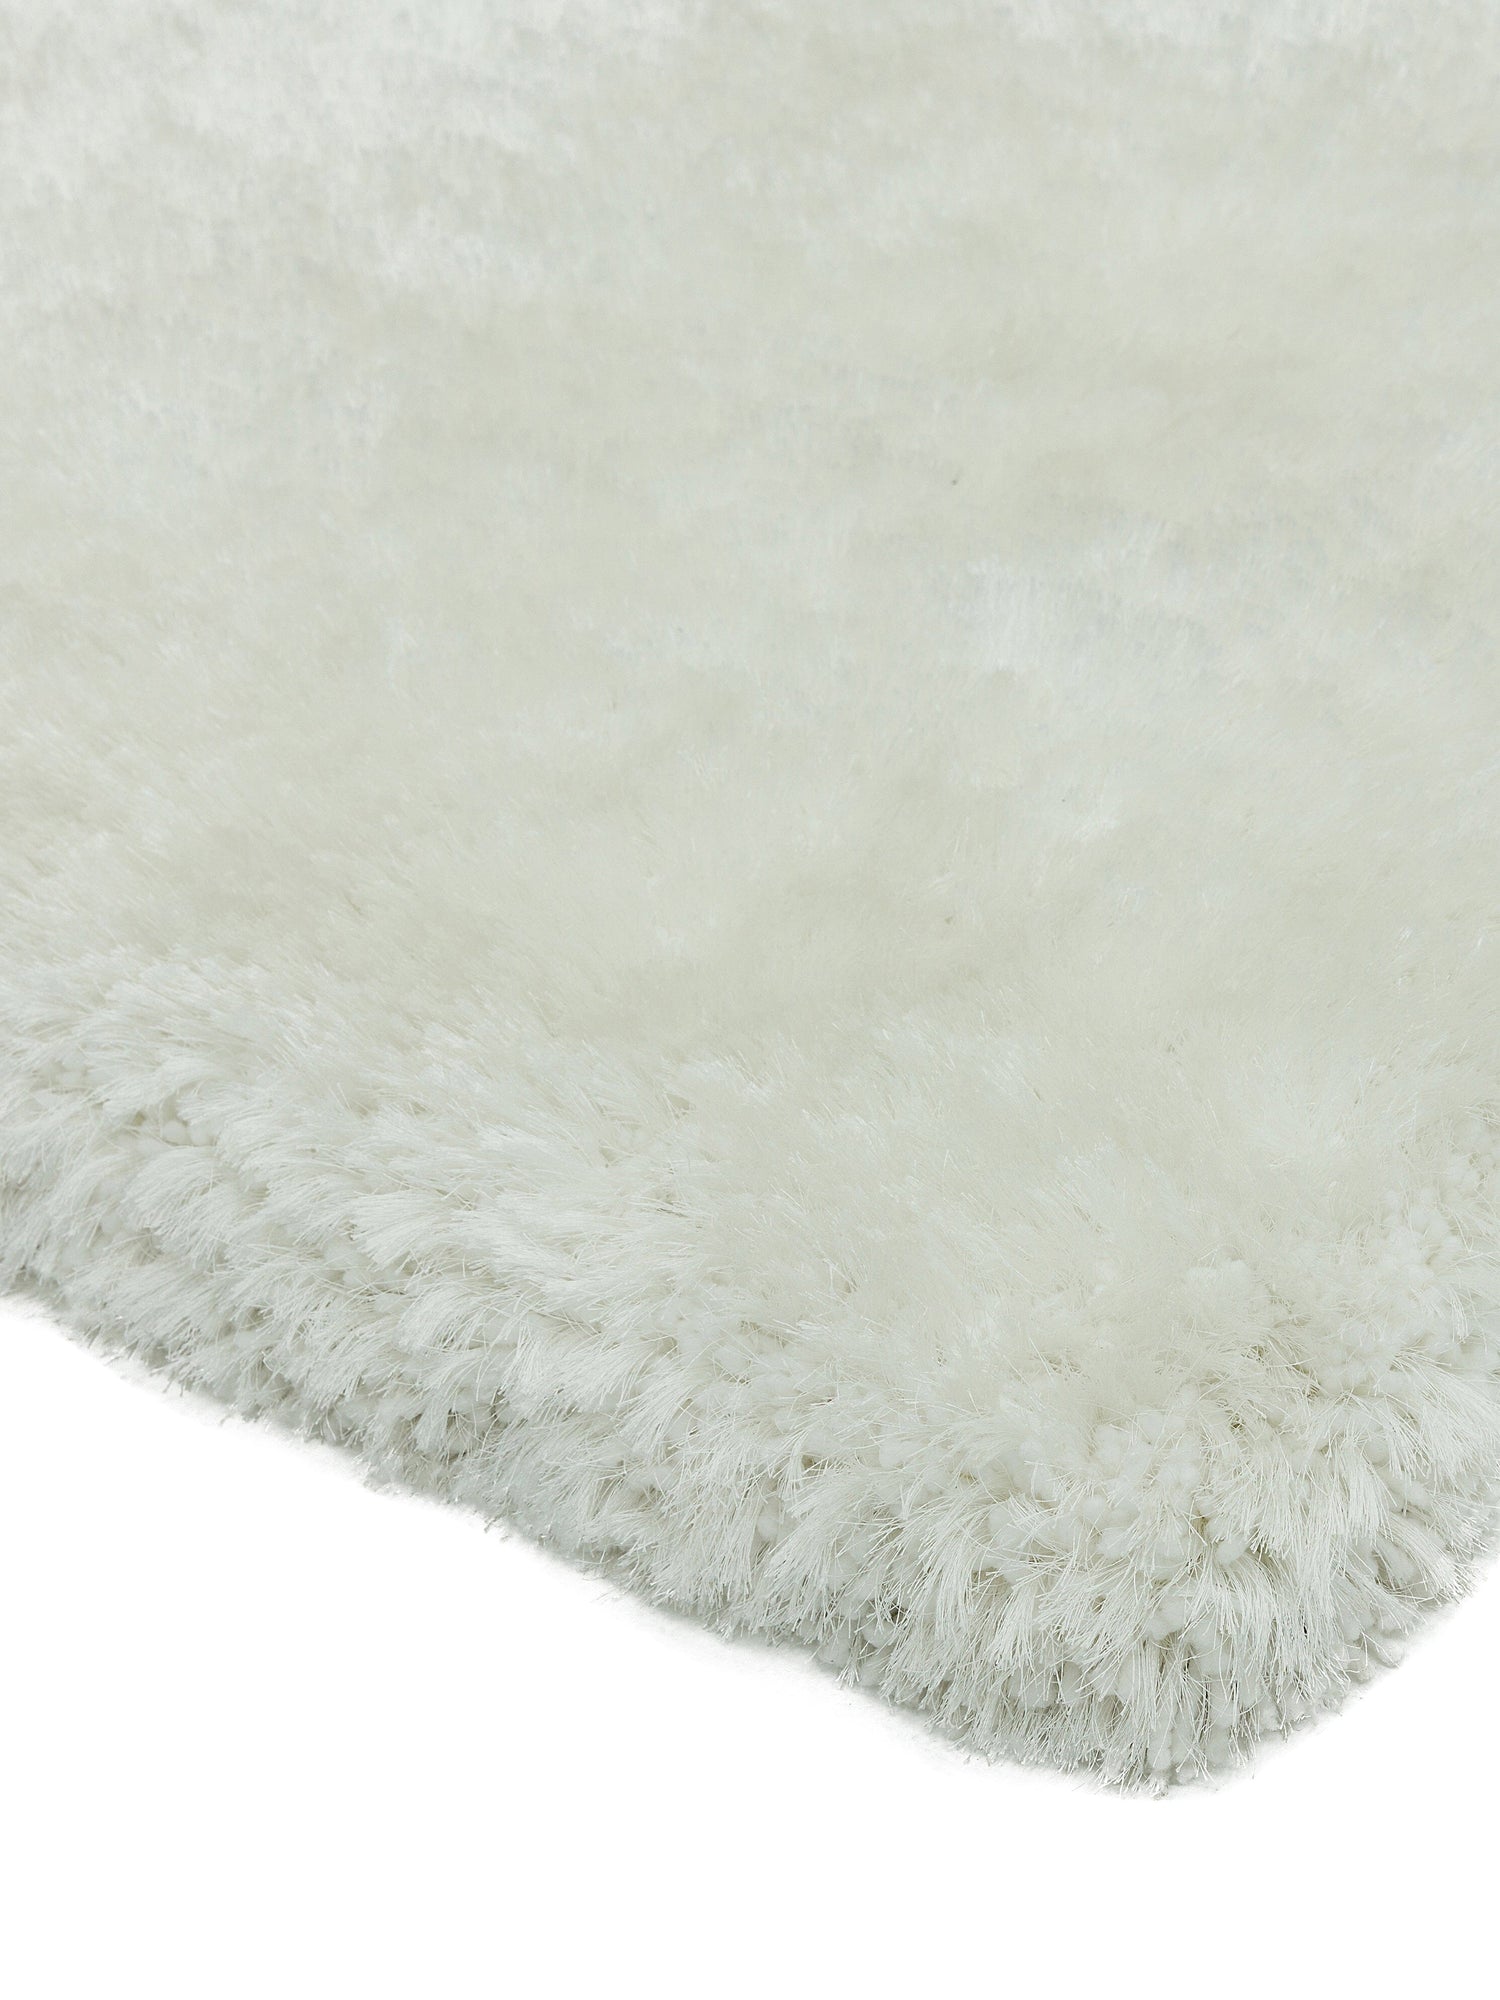  Asiatic Carpets-Asiatic Carpets Plush Hand Woven Rug White - 140 x 200cm-Cream, White 085 